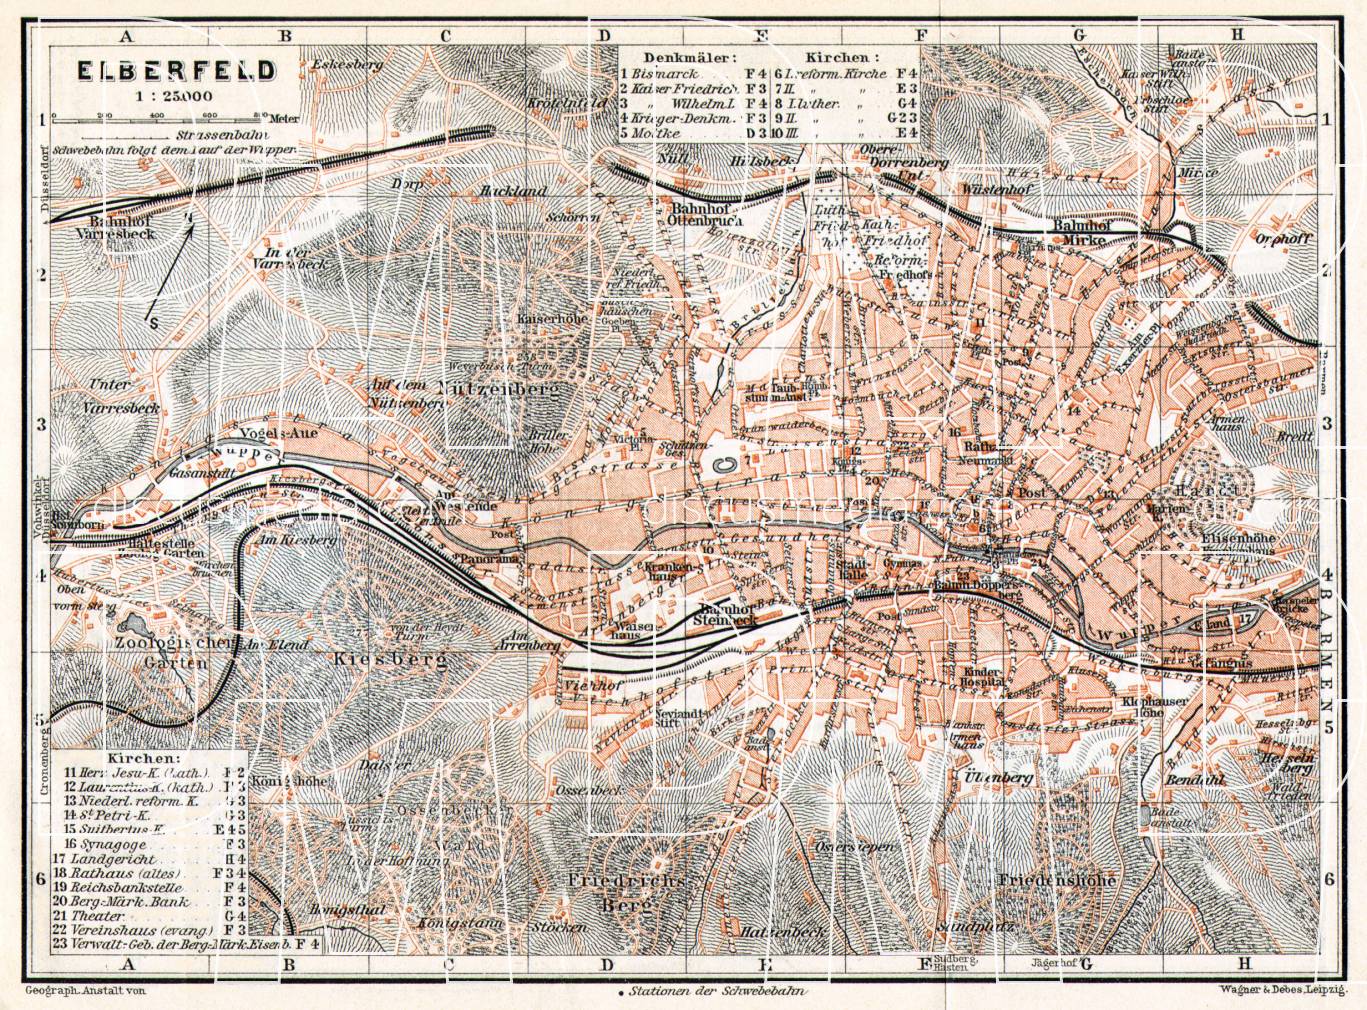 Old map of Elberfeld in 1906. Buy vintage map replica poster print or